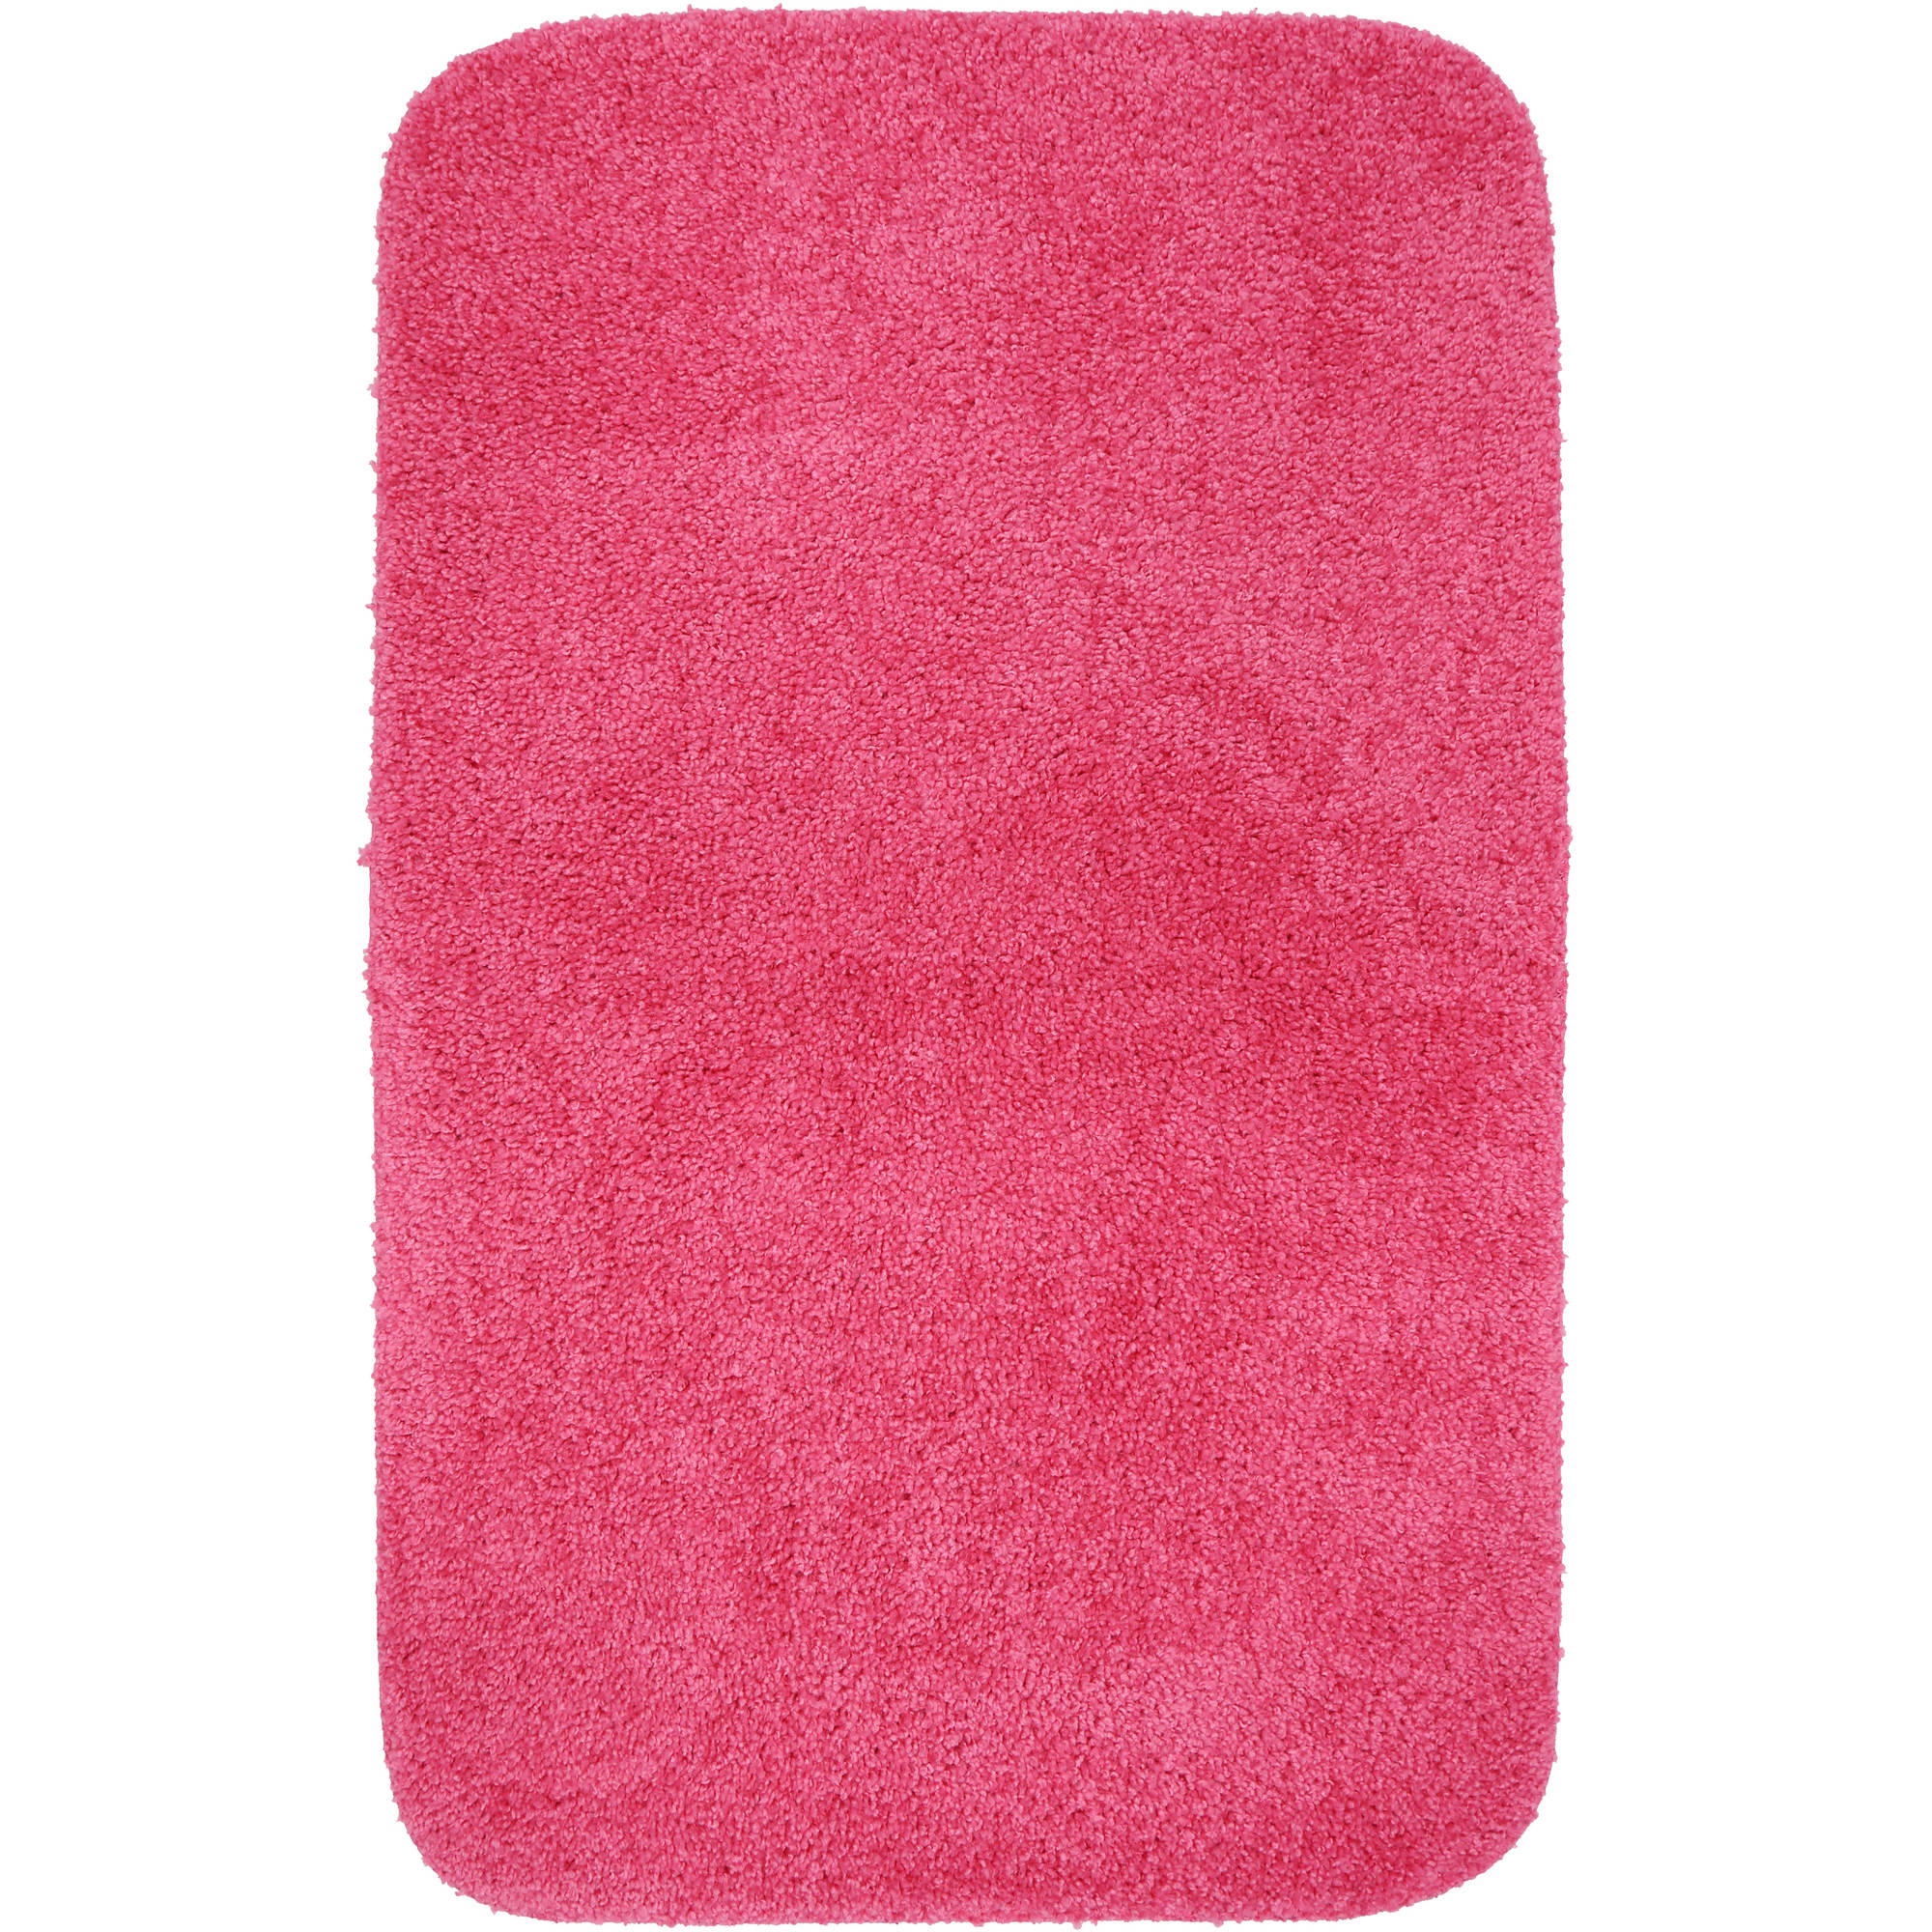 Mainstays 100% Nylon 19.5" x 32" Basic Bright Pink Bath Rug, 1 Each - image 1 of 4